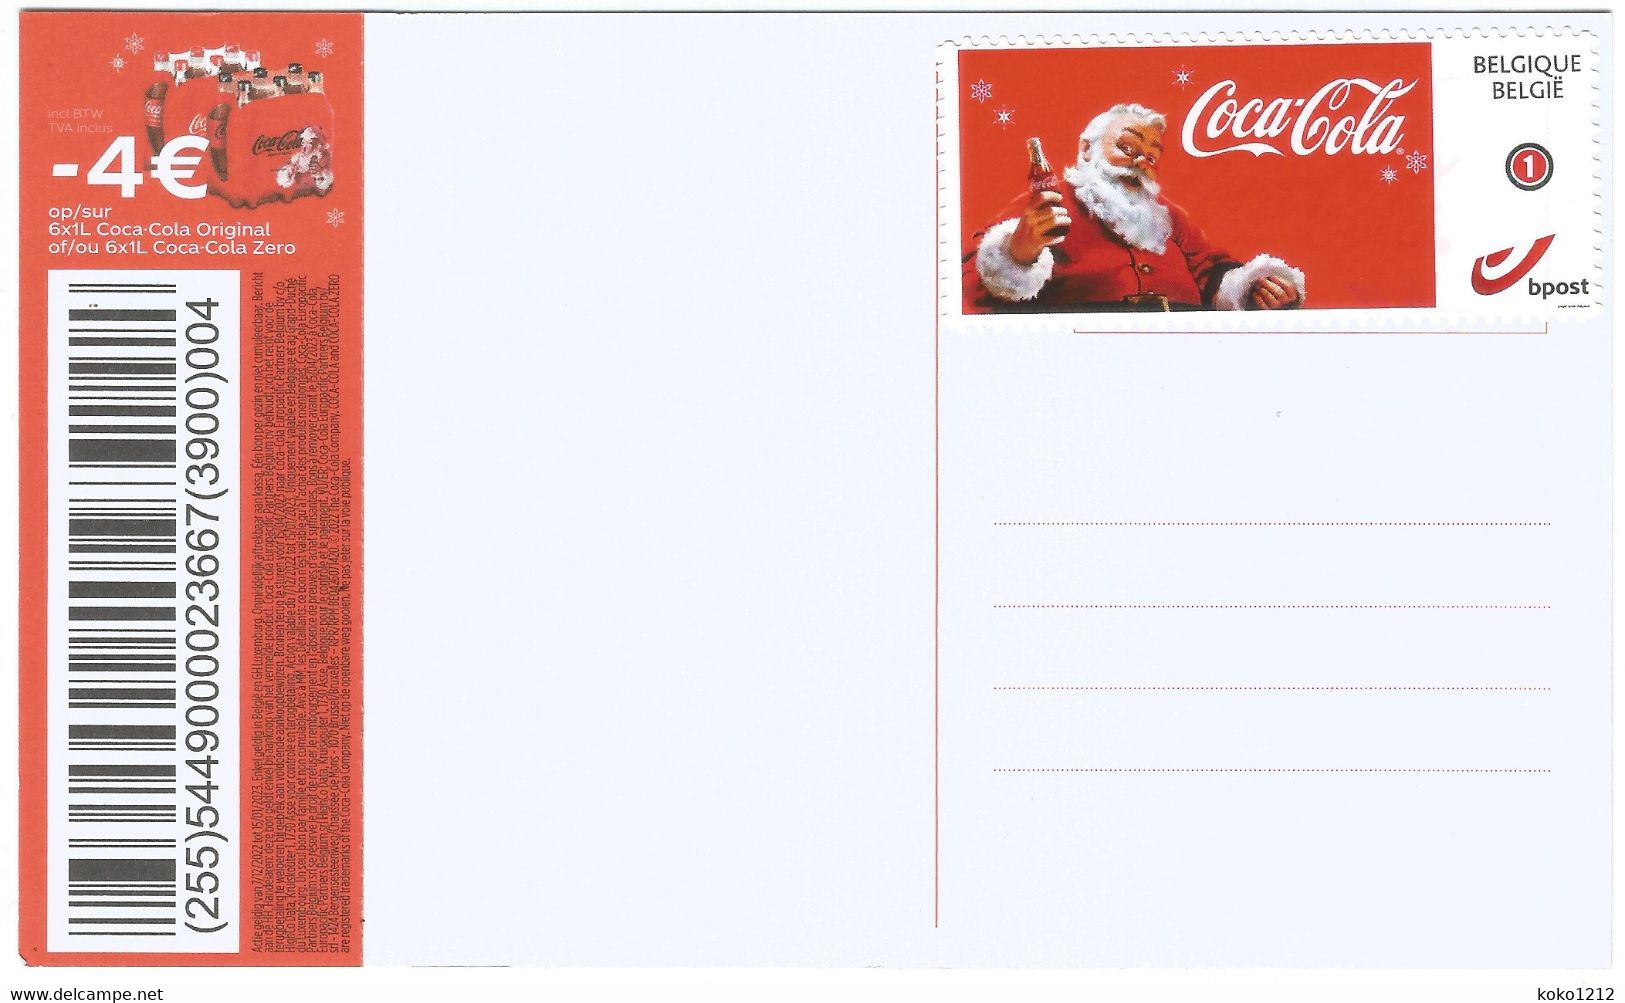 RARE CocaCola Belgium Postcard (2/2) With Private Stamp CocaCola NEUF - Postkarten